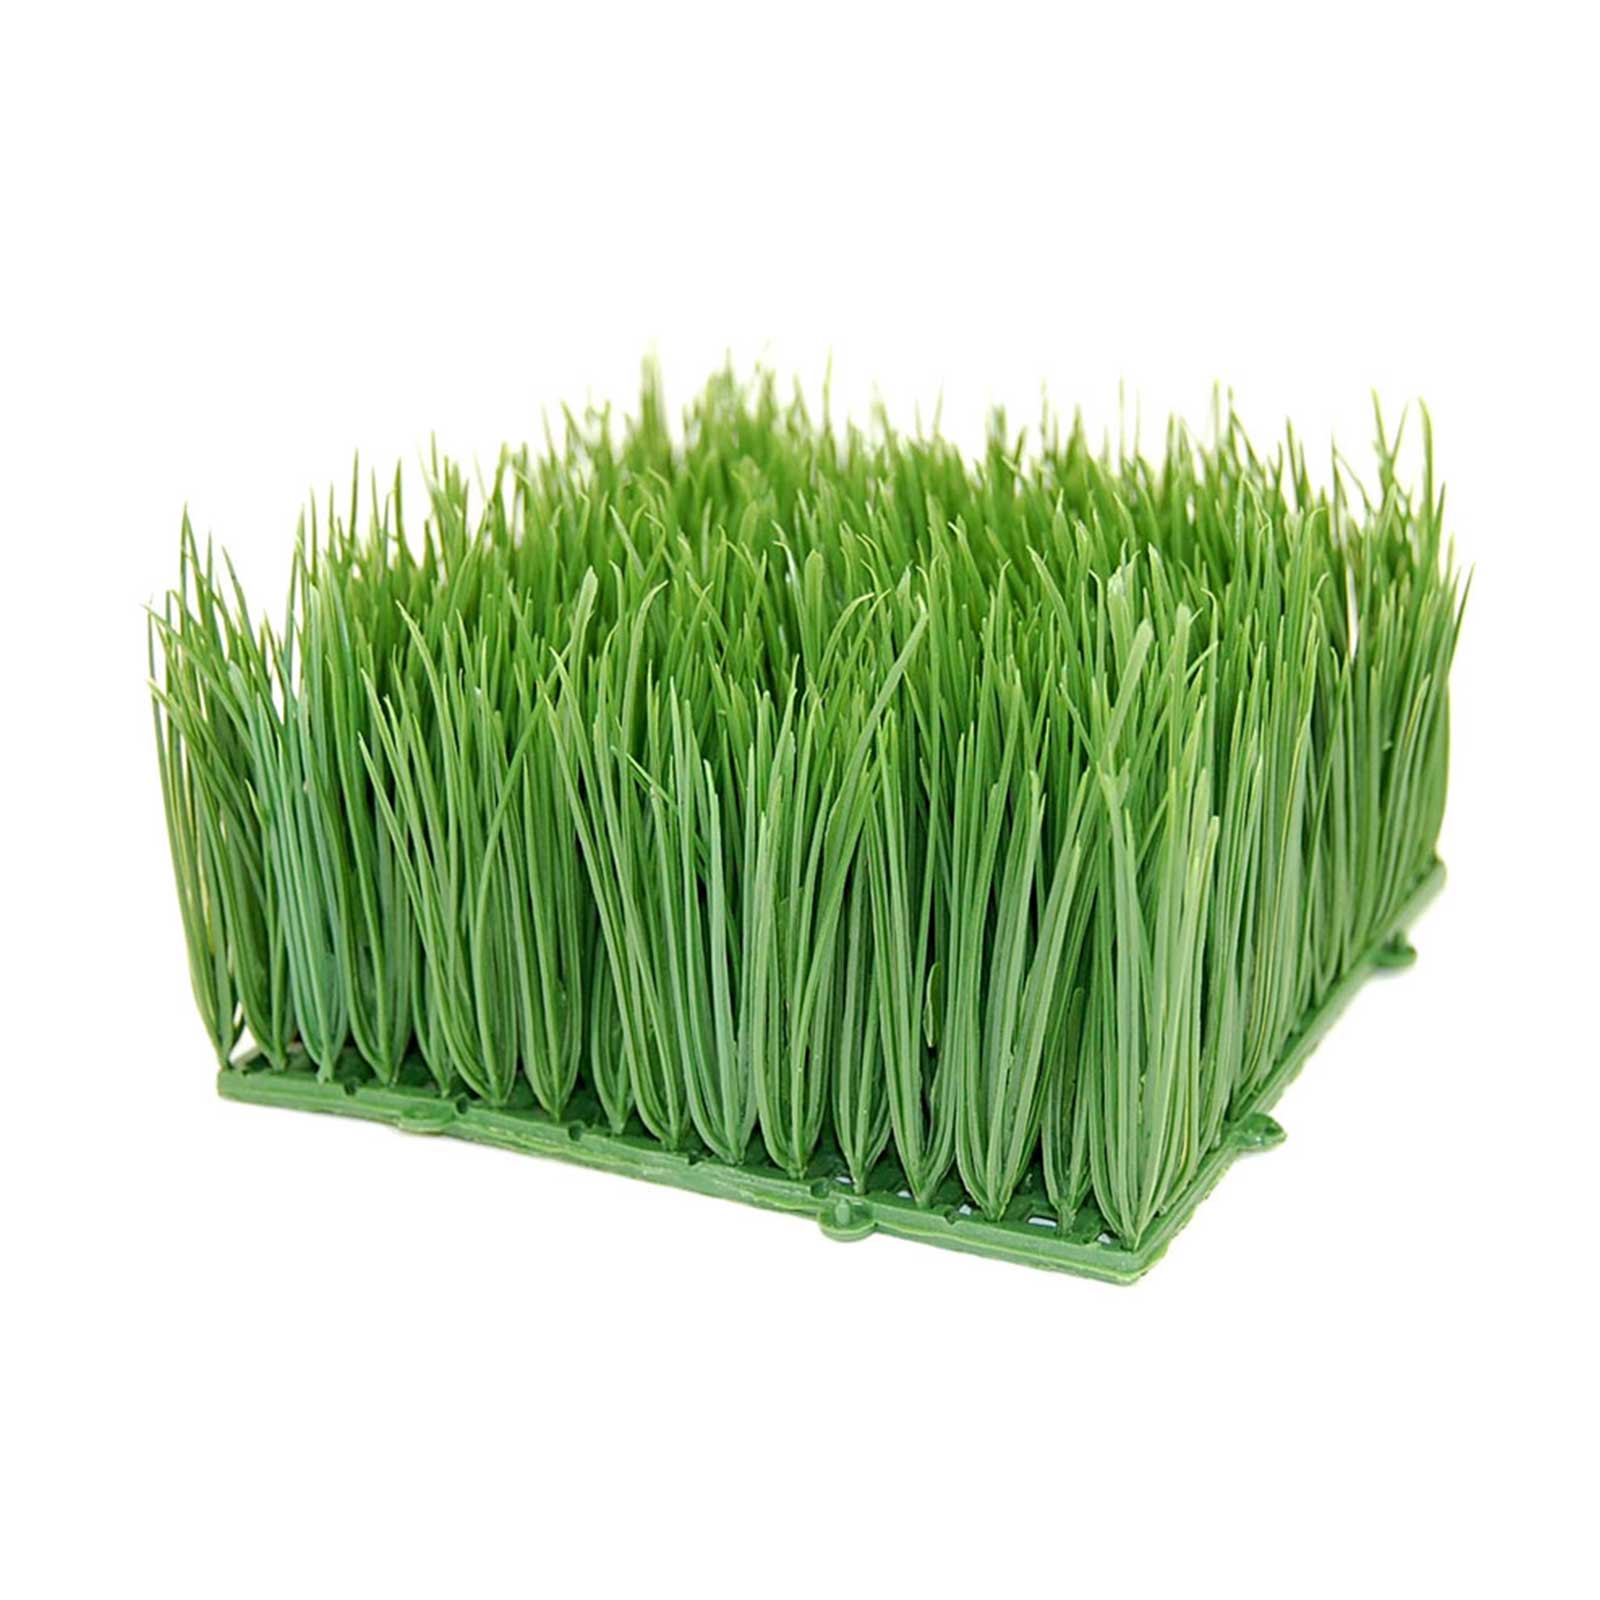 Artificial Wheat Grass- Fake Soft PVC Plastic Decorative Wheatgrass: Ornamantal Flower Arranging & Home Decor - 6"x6"x4" - image 1 of 2